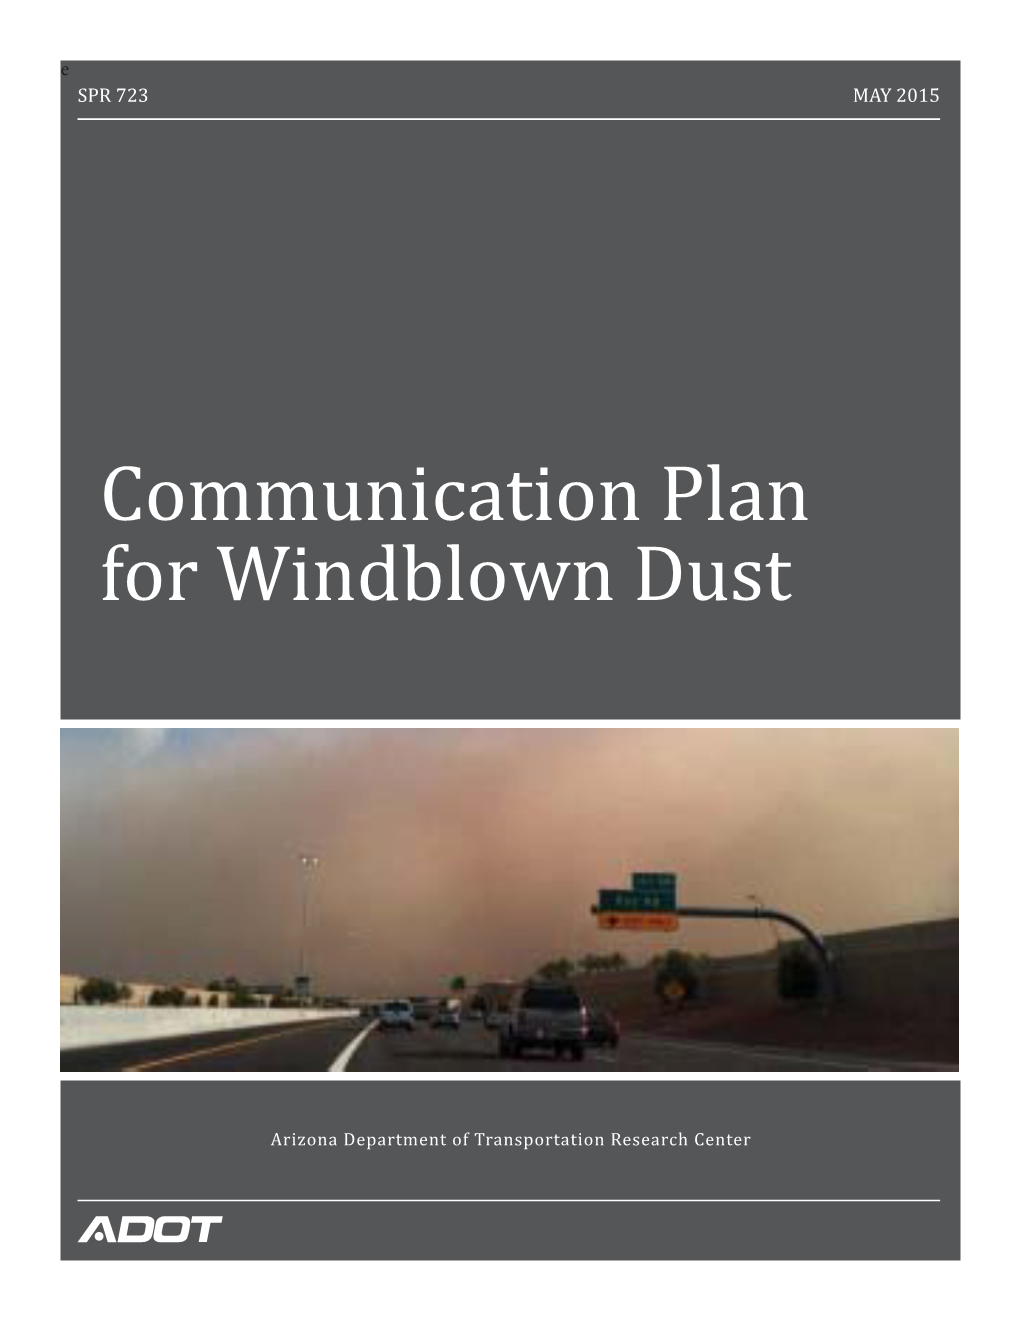 SPR-723: Communication Plan for Windblown Dust